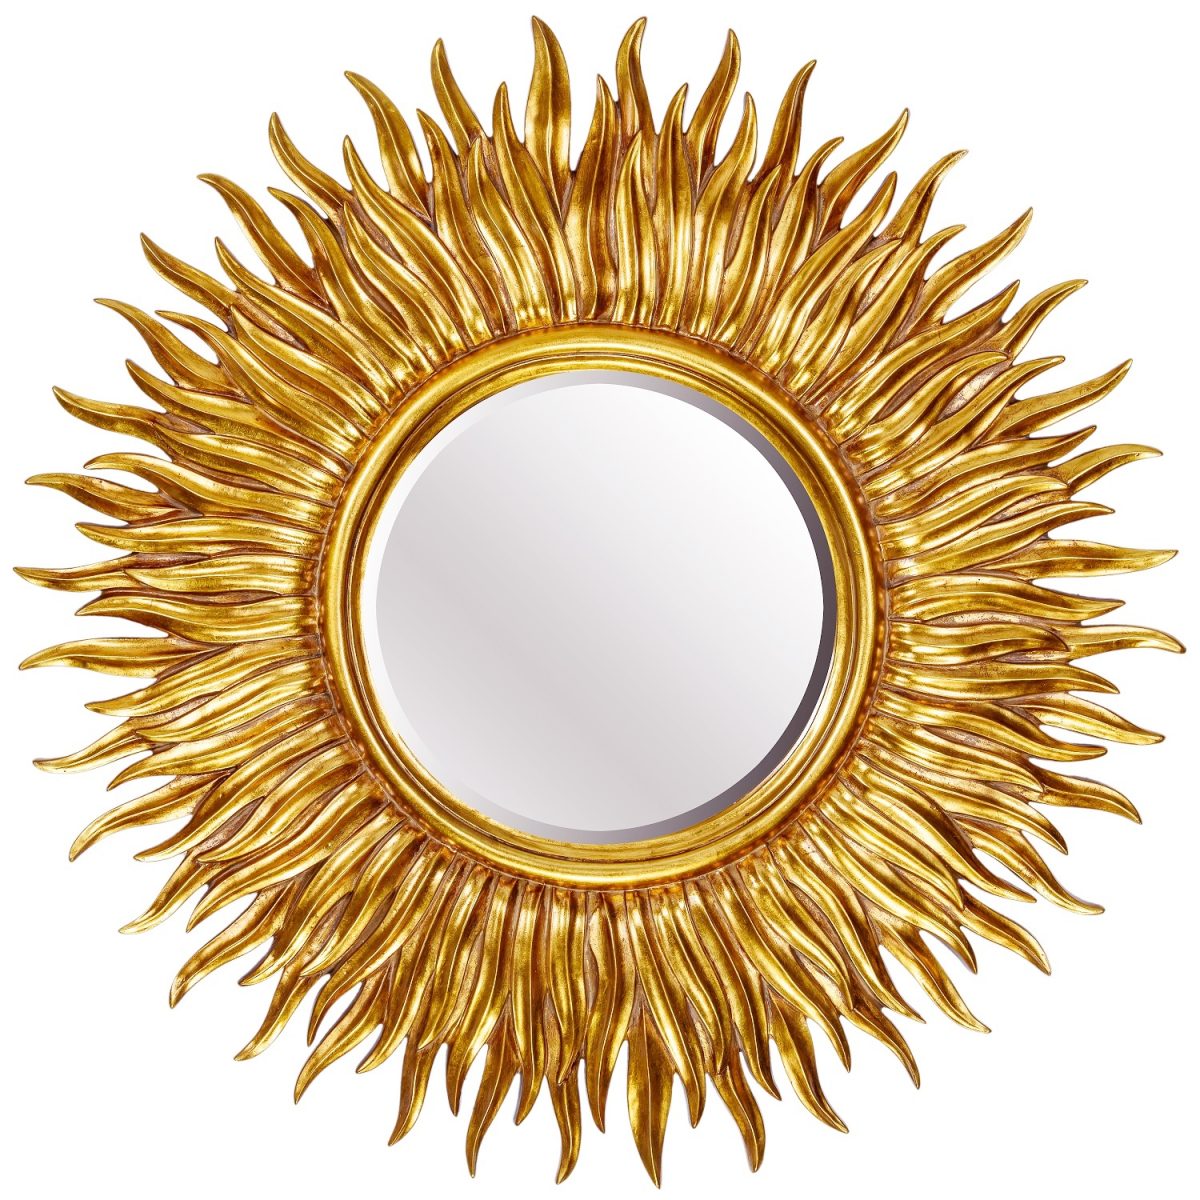 Зеркало-солнце Sunshine Gold фото и цена, купить